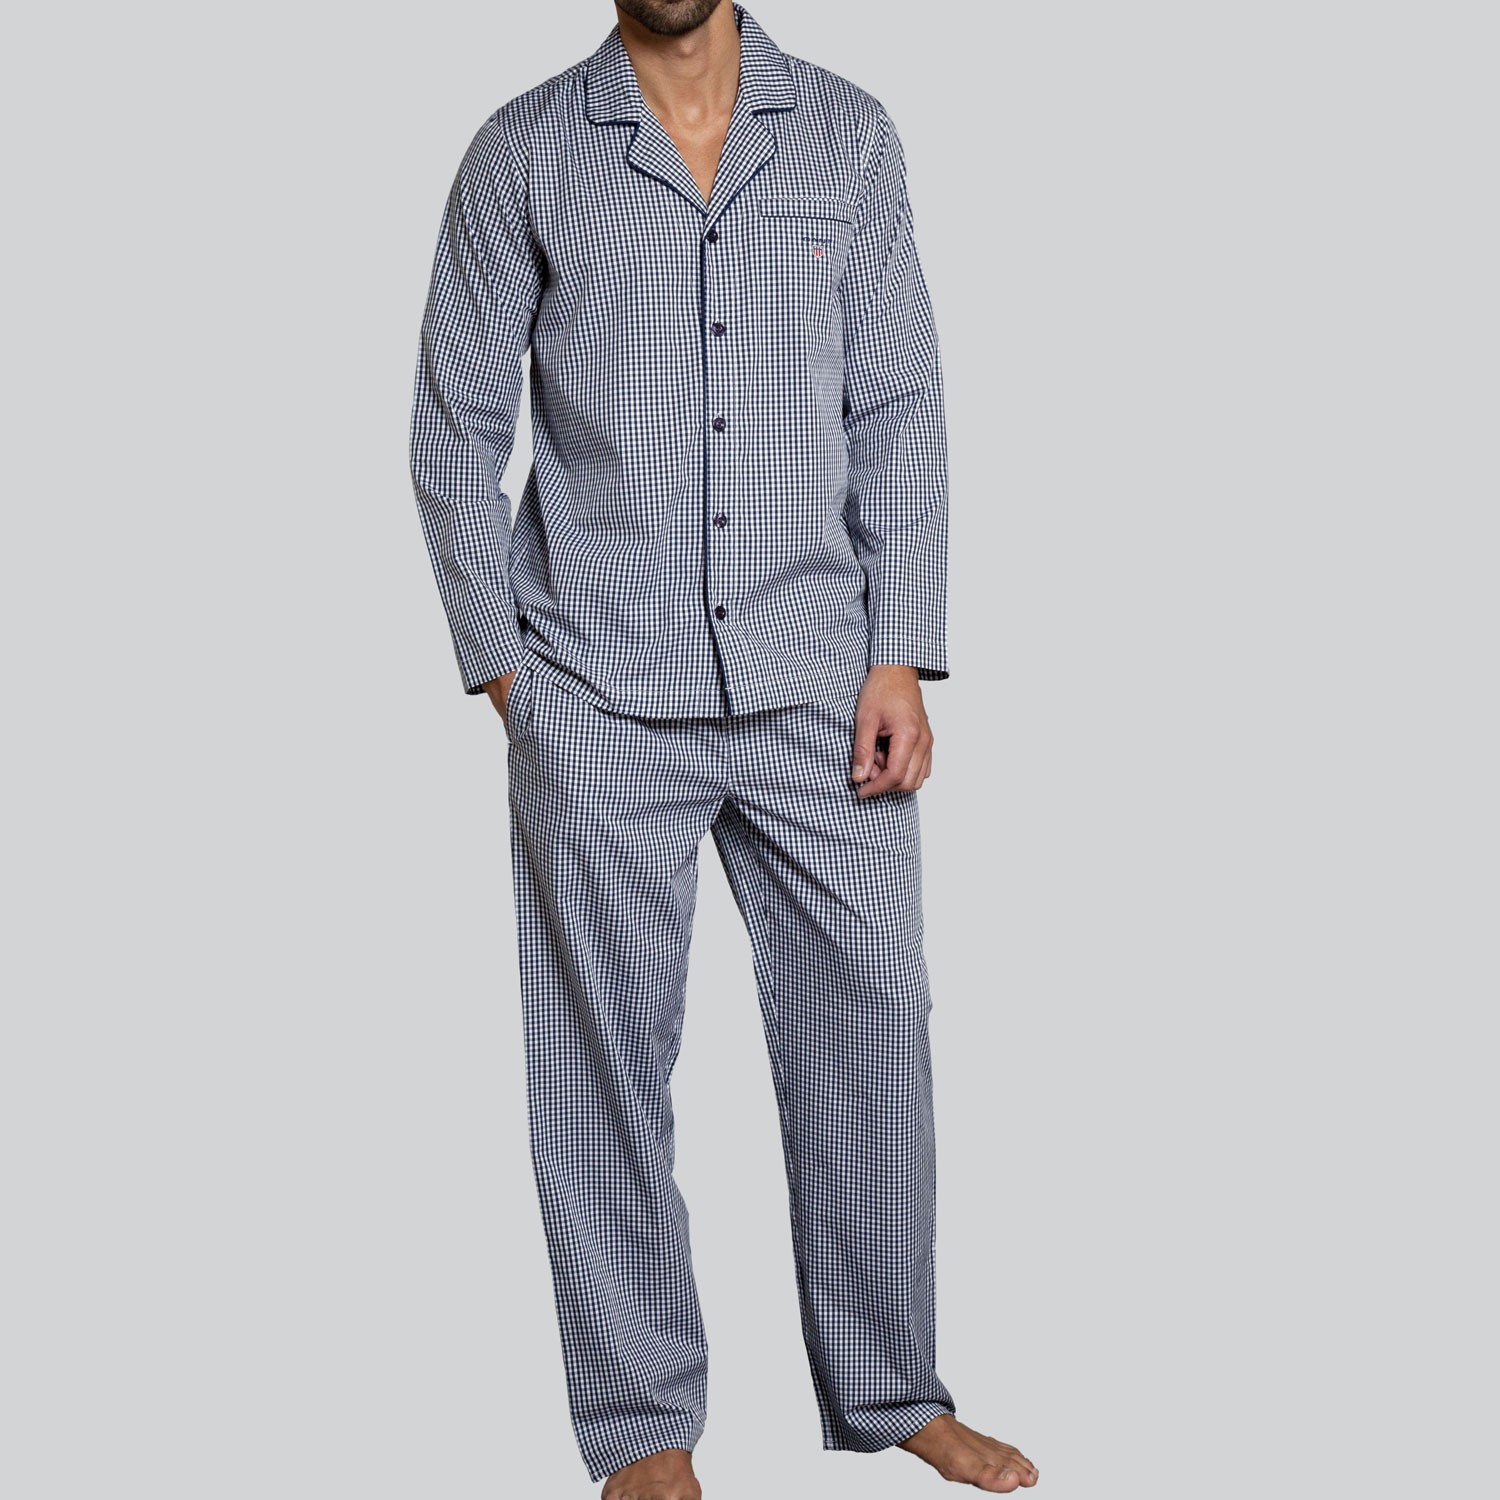 Gant Pyjama Set Gingham - Nightwear - Underwear - Timarco.co.uk